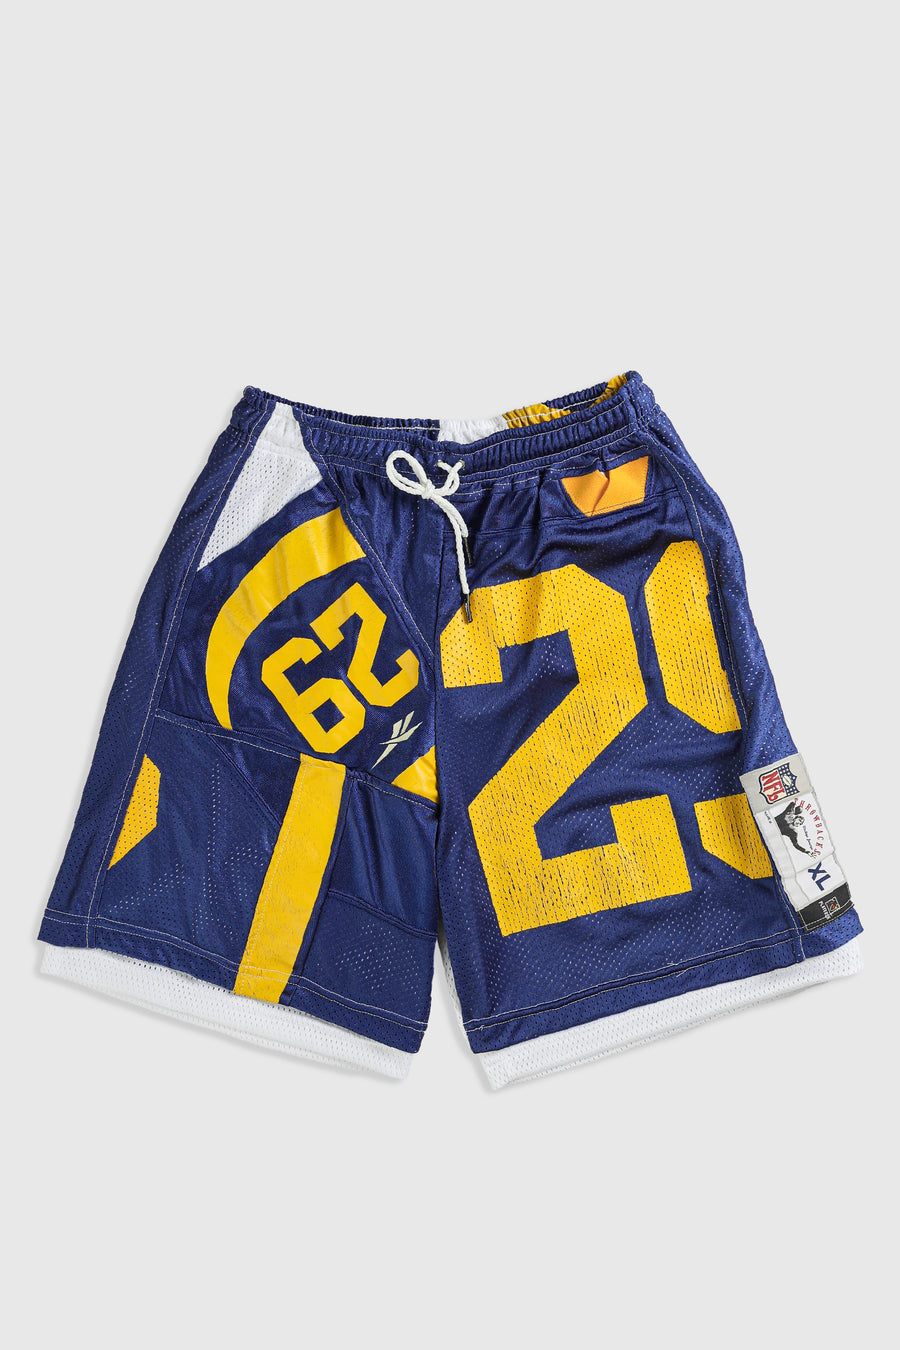 Unisex Rework Rams NFL Jersey Shorts - S